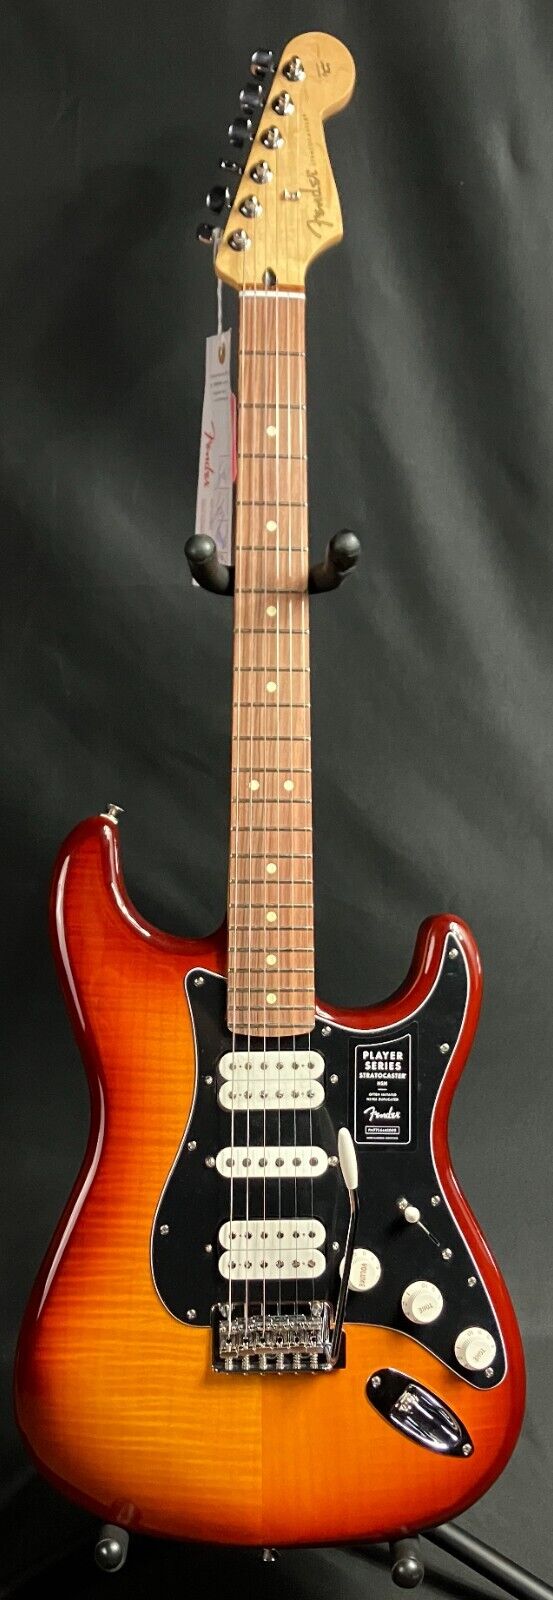 Fender Player Stratocaster HSH Plus Top Electric Guitar Tobacco Sunburst Finish